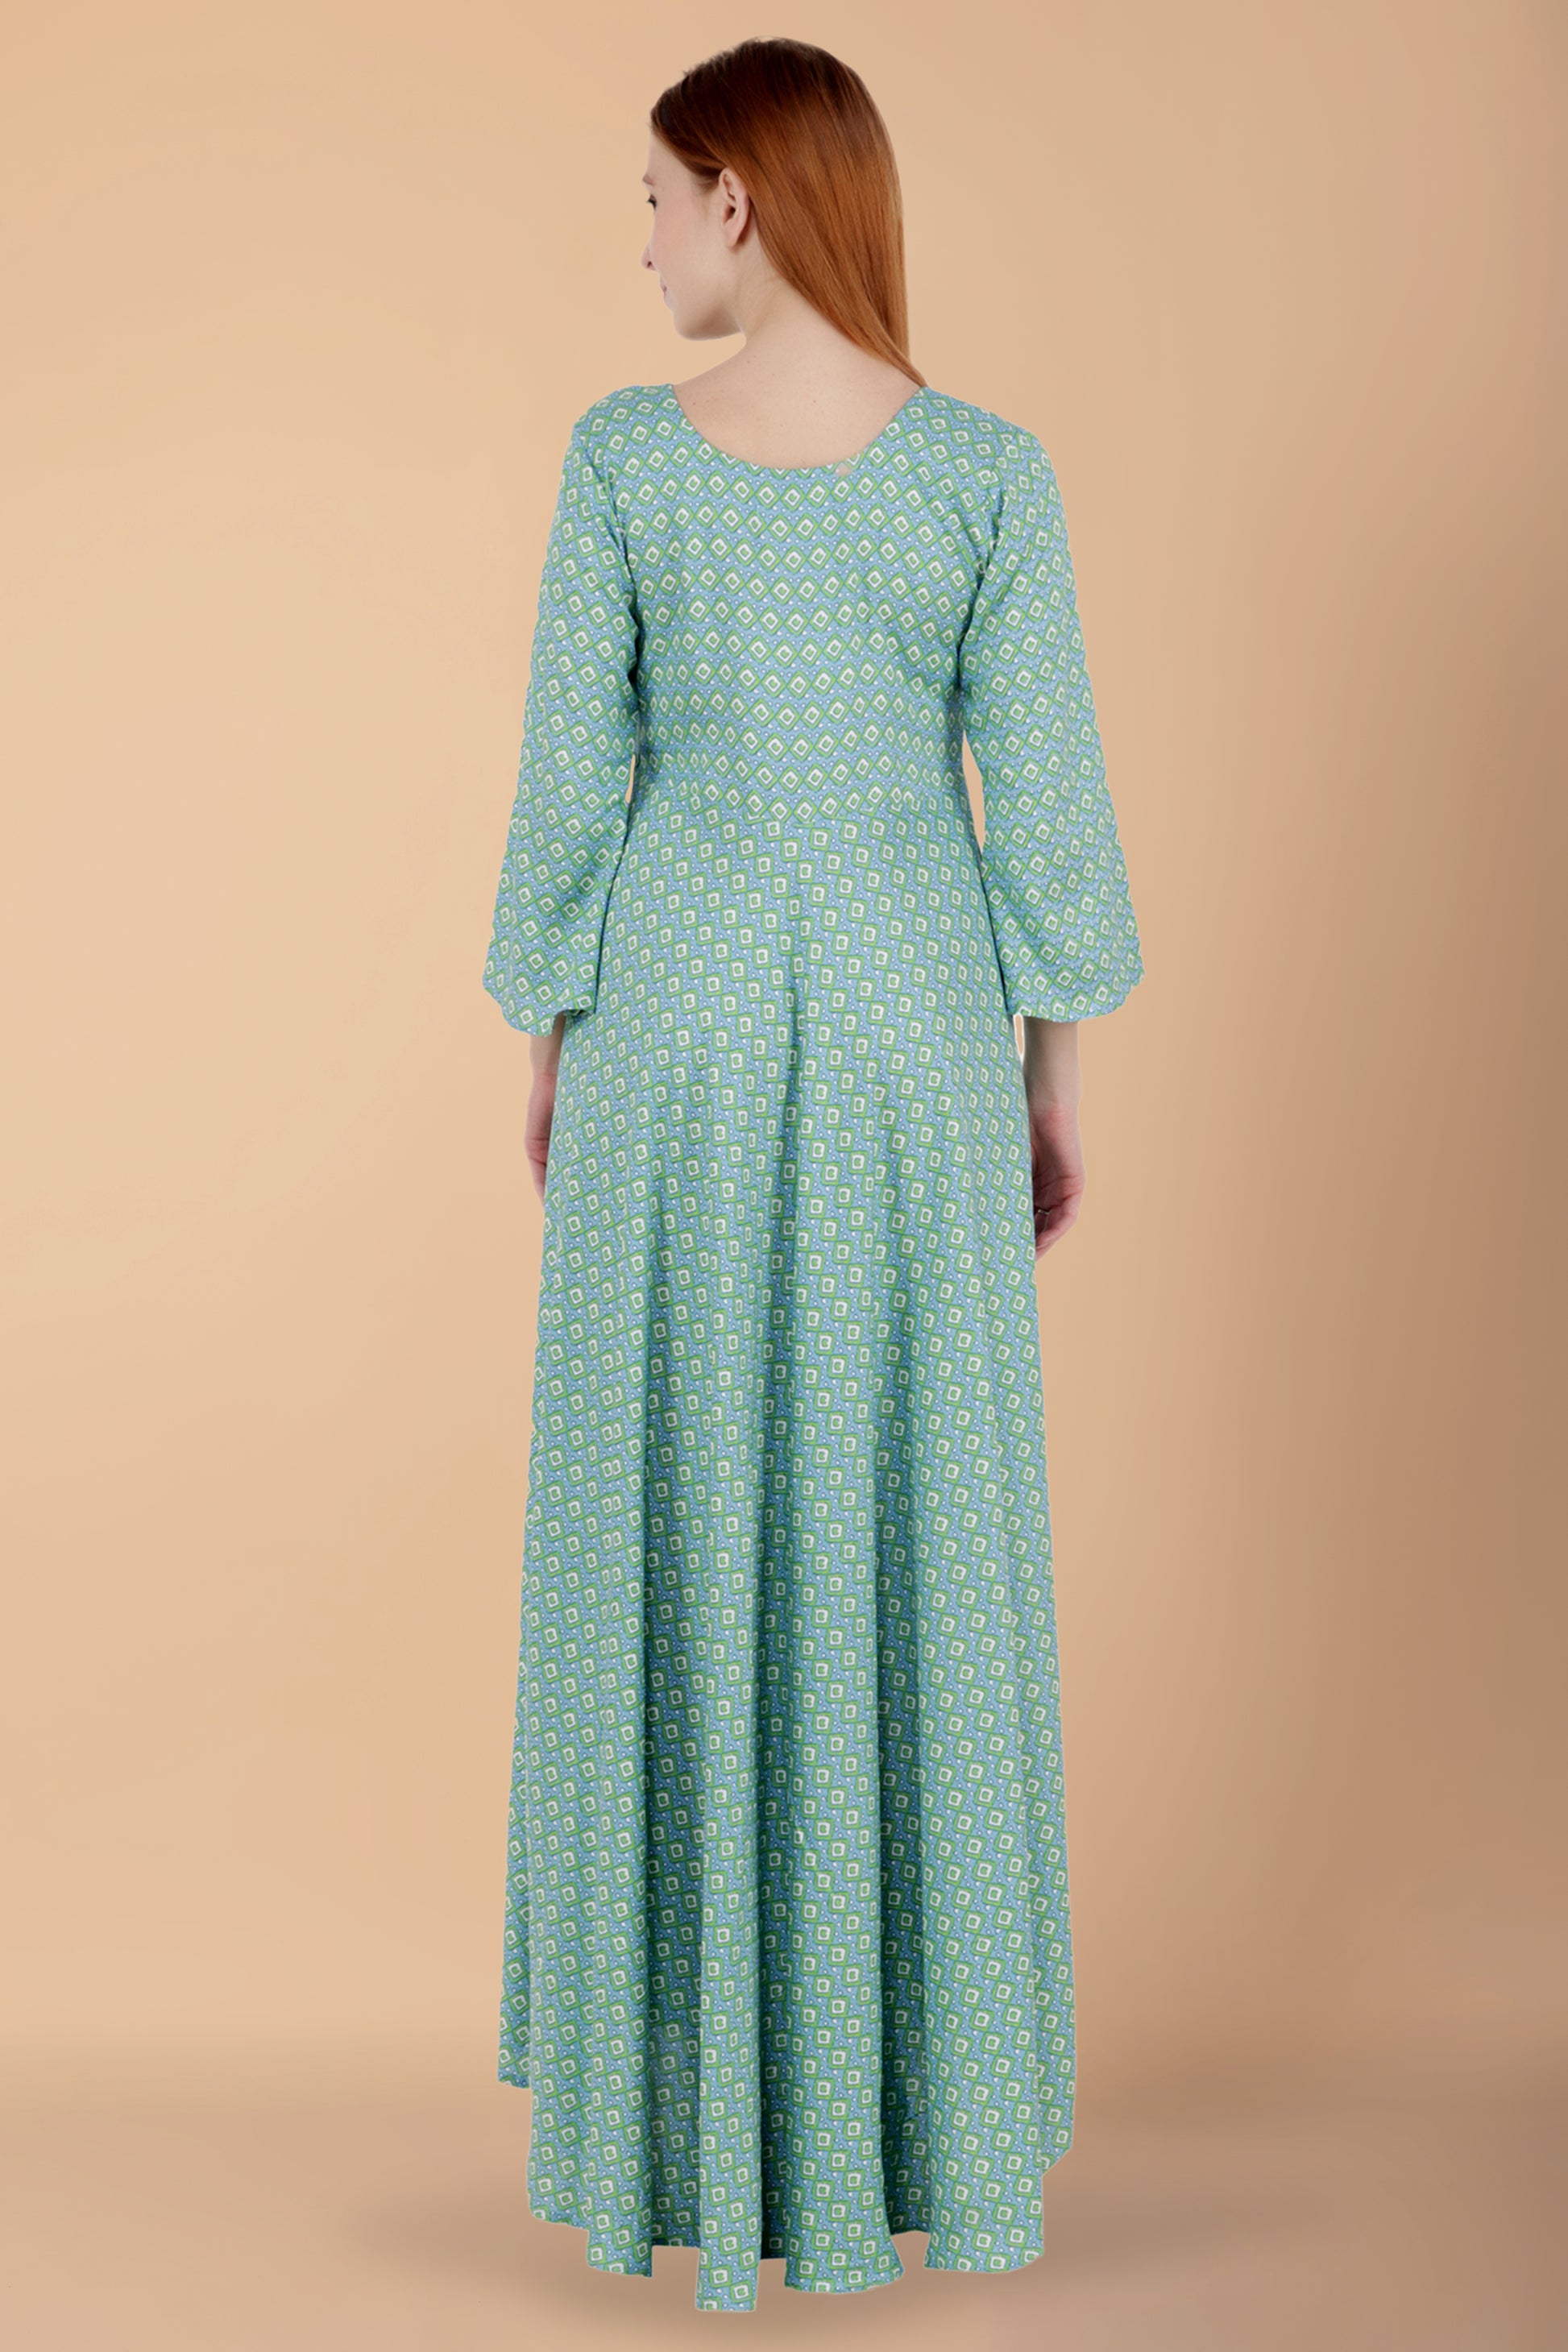 Mint Gathered Dress | Apella.